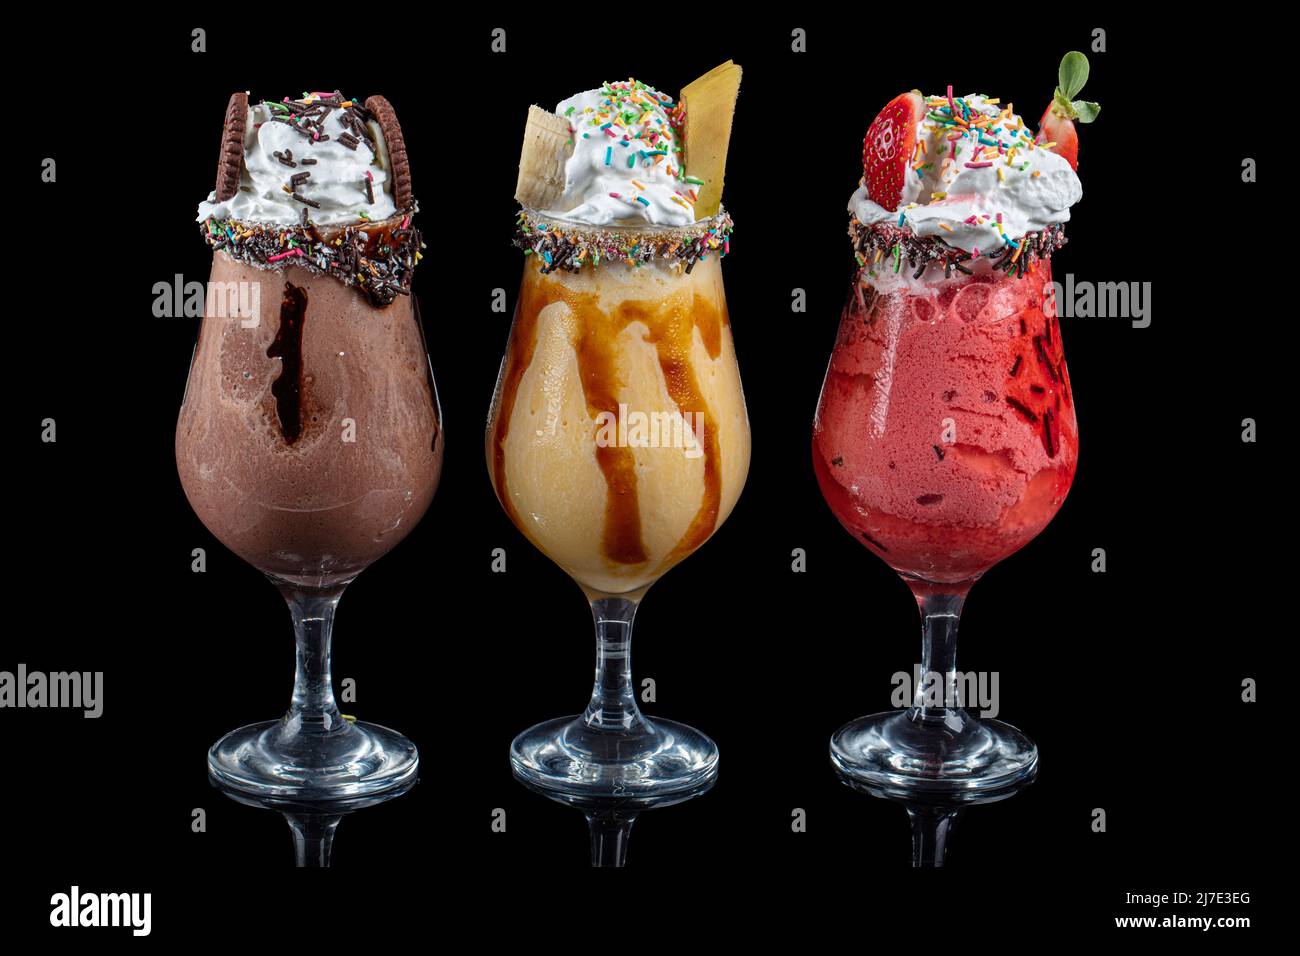 https://c8.alamy.com/comp/2J7E3EG/three-glasses-of-milkshake-with-assorted-flavors-chocolate-ananas-and-strawberry-milkshake-2J7E3EG.jpg